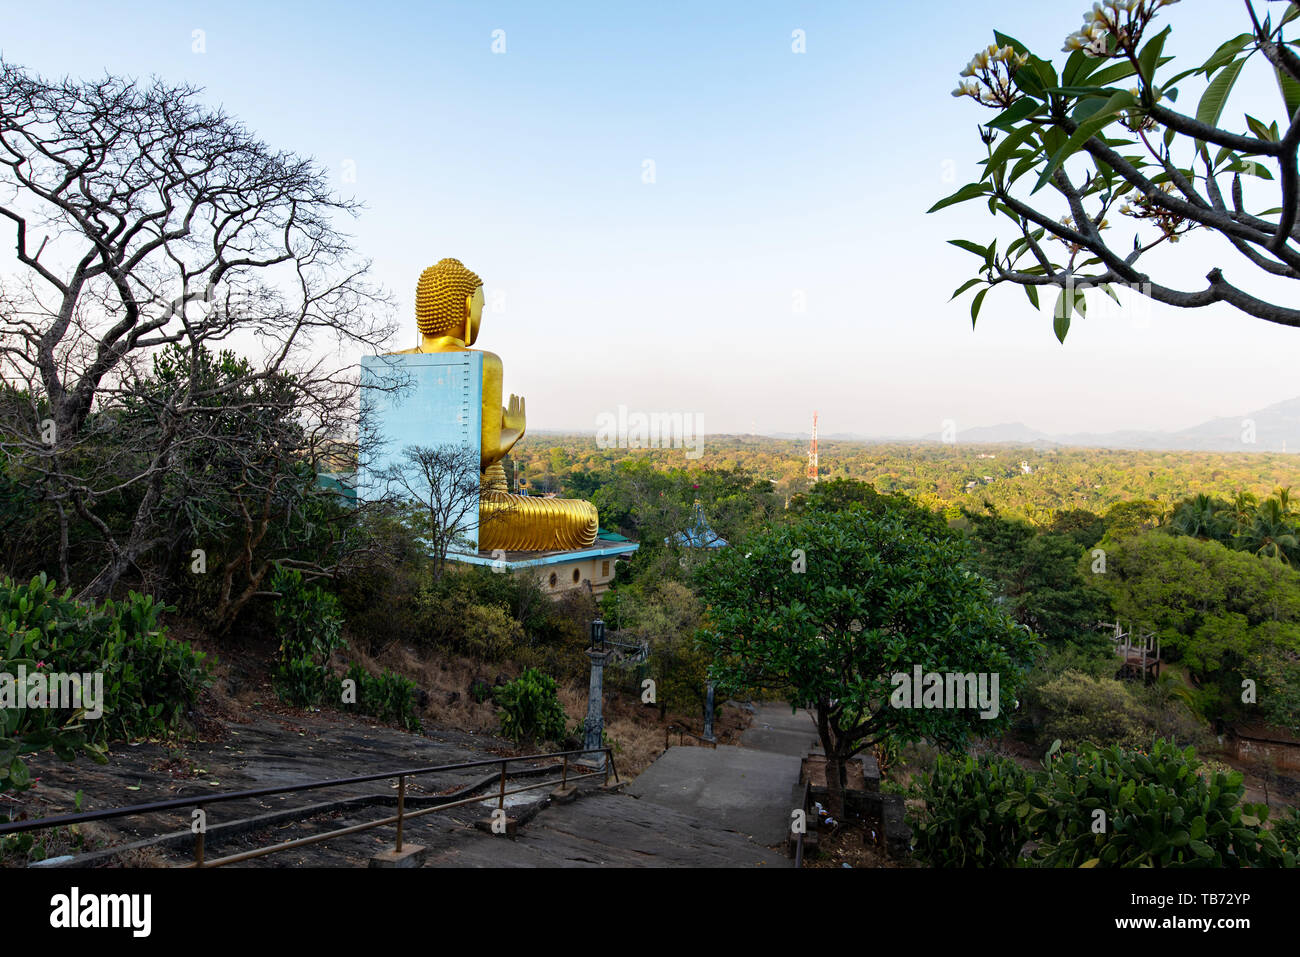 Dambulla, Sri Lanka - März 30, 2019: Goldene Tempel mit Big Buddha Statue in der Nähe von Dambulla Cave Tempel Komplex in Sri Lanka Stockfoto